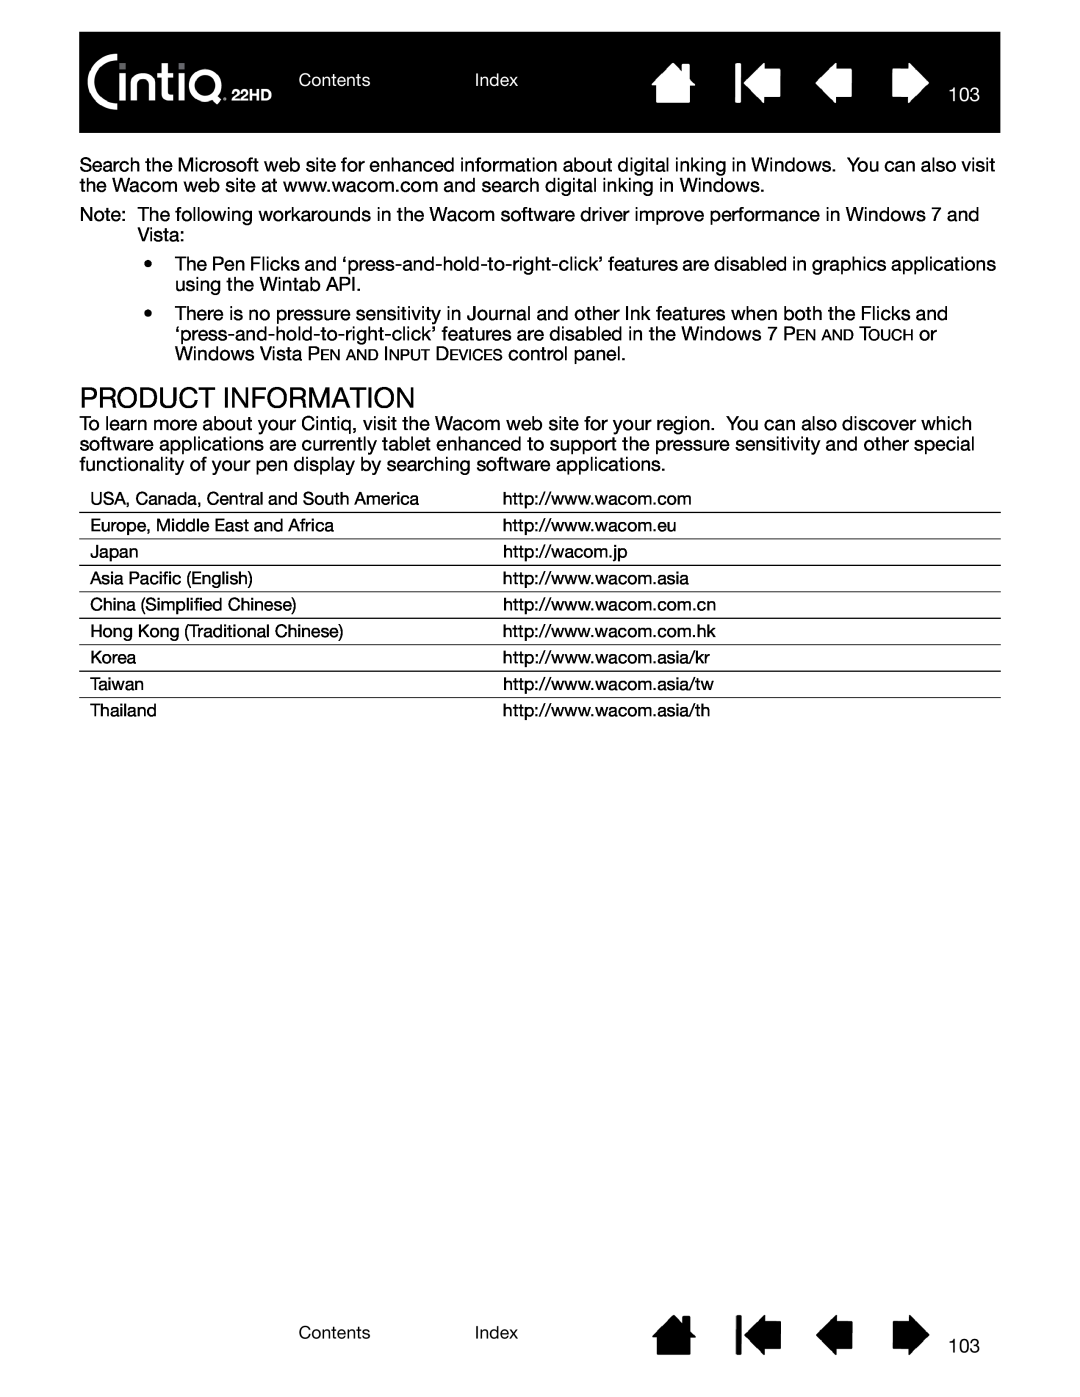 Wacom DTK-2200 user manual Product Information 